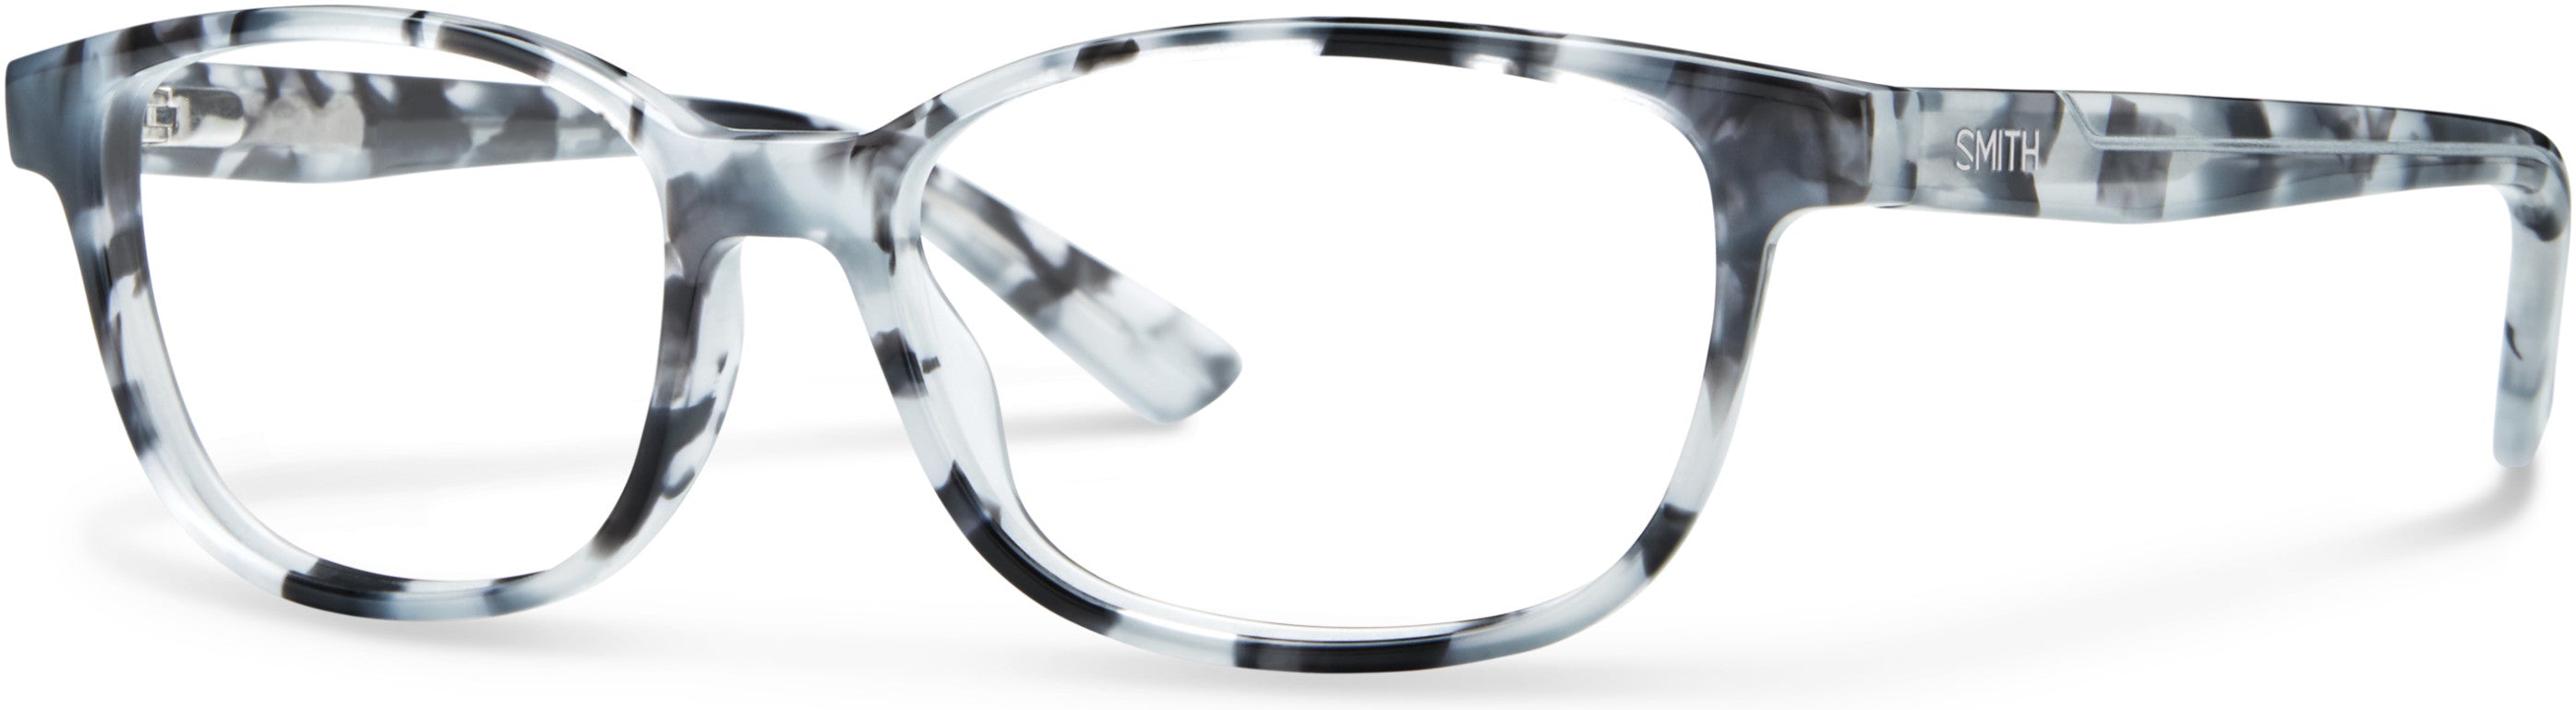 Smith Goodwin/N Oval Modified Eyeglasses 0TL1-0TL1  Ice Havana (00 Demo Lens)